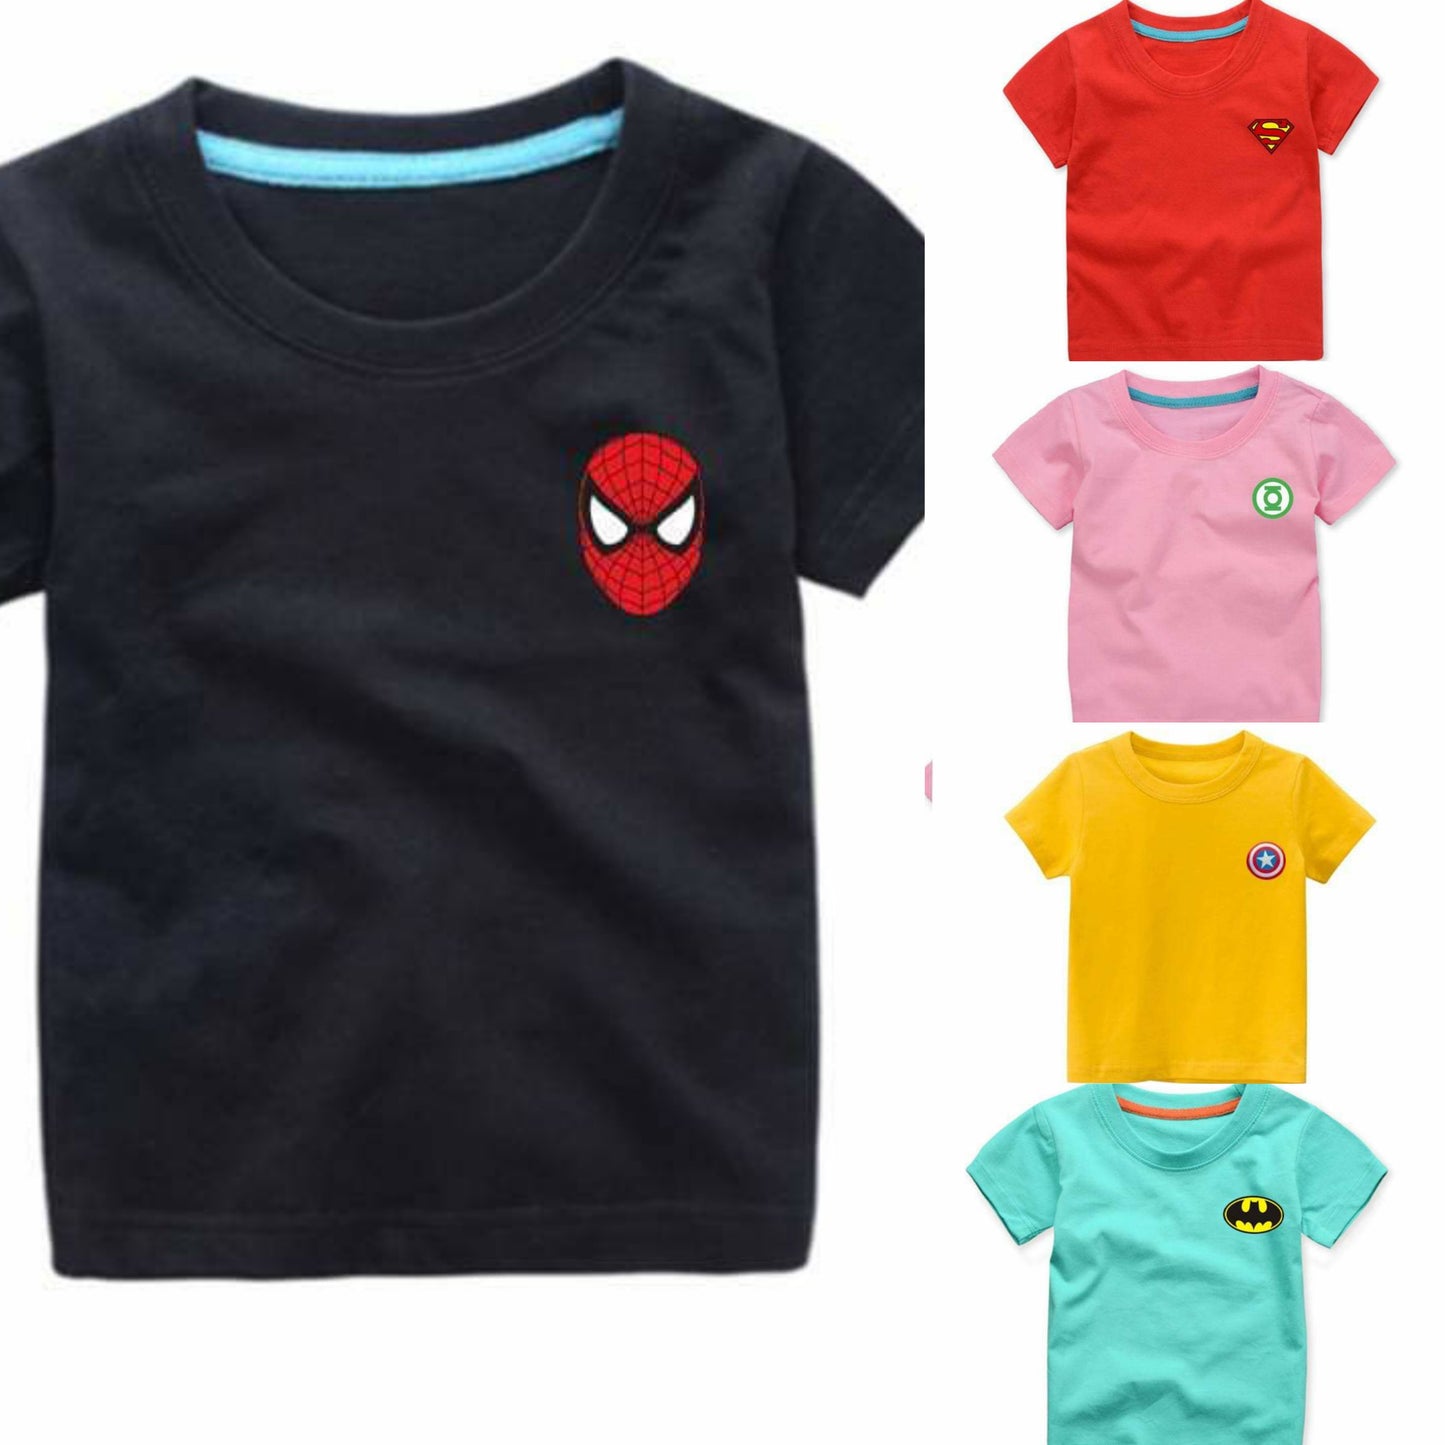 Buy 4 Get 1 Free Super Hero Logo Half Sleeve T-Shirts for Kids